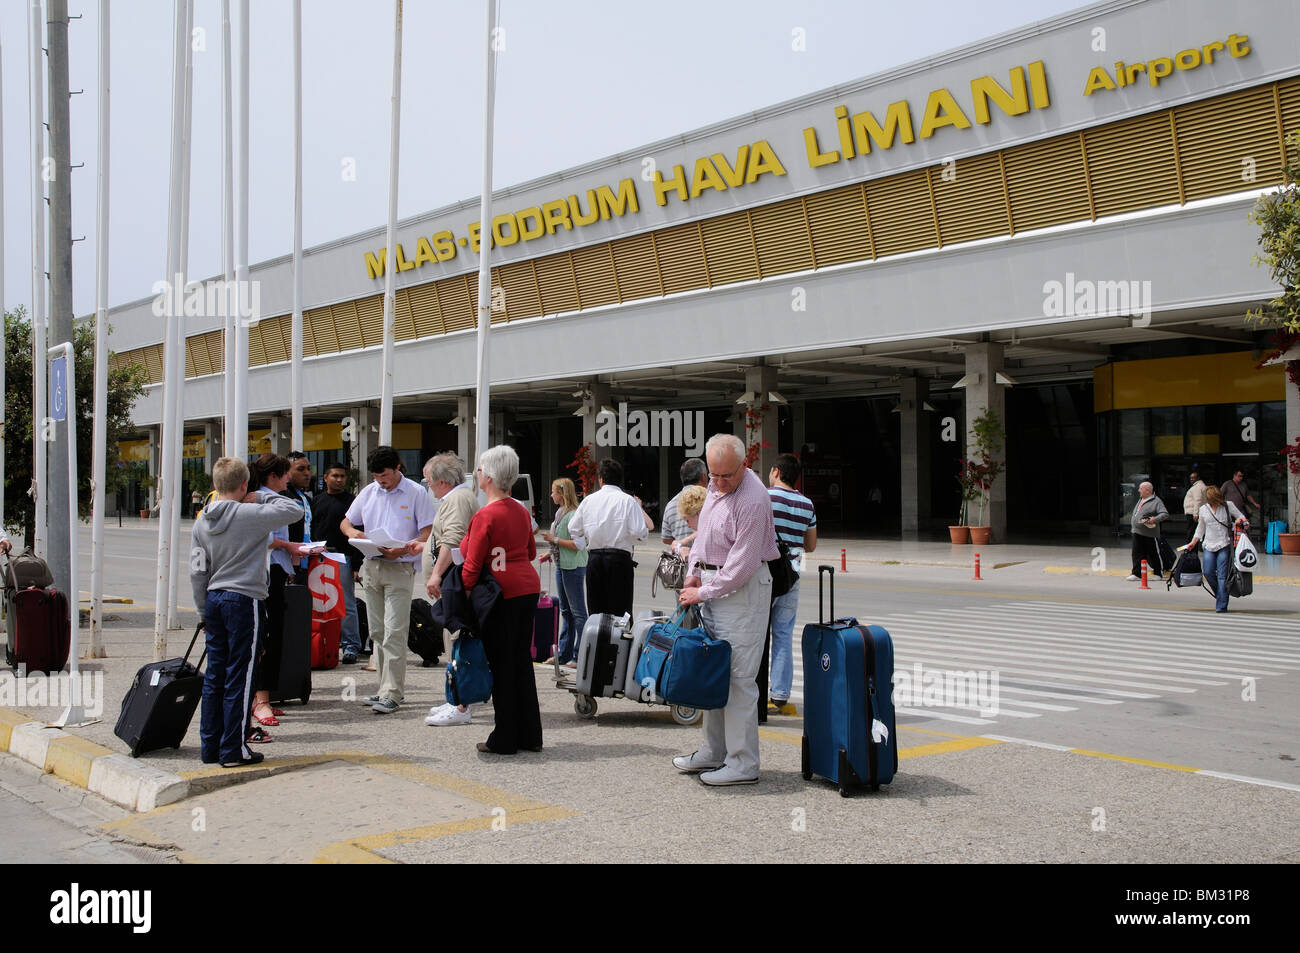 Milas Bodrum Hava Limani Airport building exterior in the Agean coastal region of Turkey Stock Photo